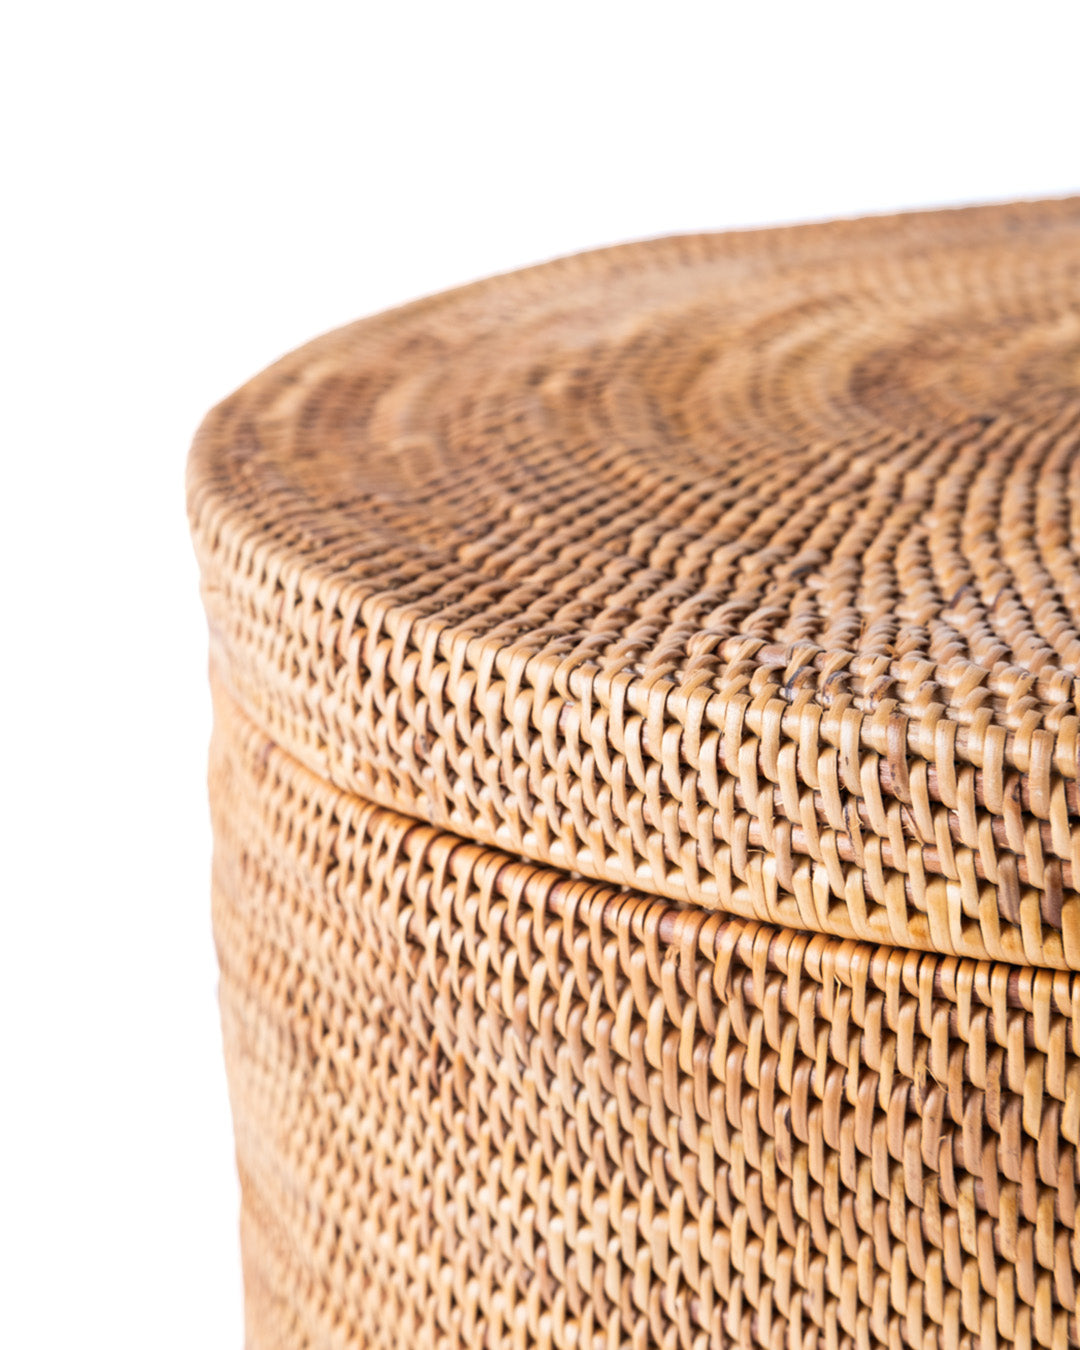 Cesto de ratán 100% natural de halus Alor decorativo con tapa, organizador hecho a mano con acabado natural redondo, 30 cm de diámetro x 22 de altura, fabricado en Indonesia